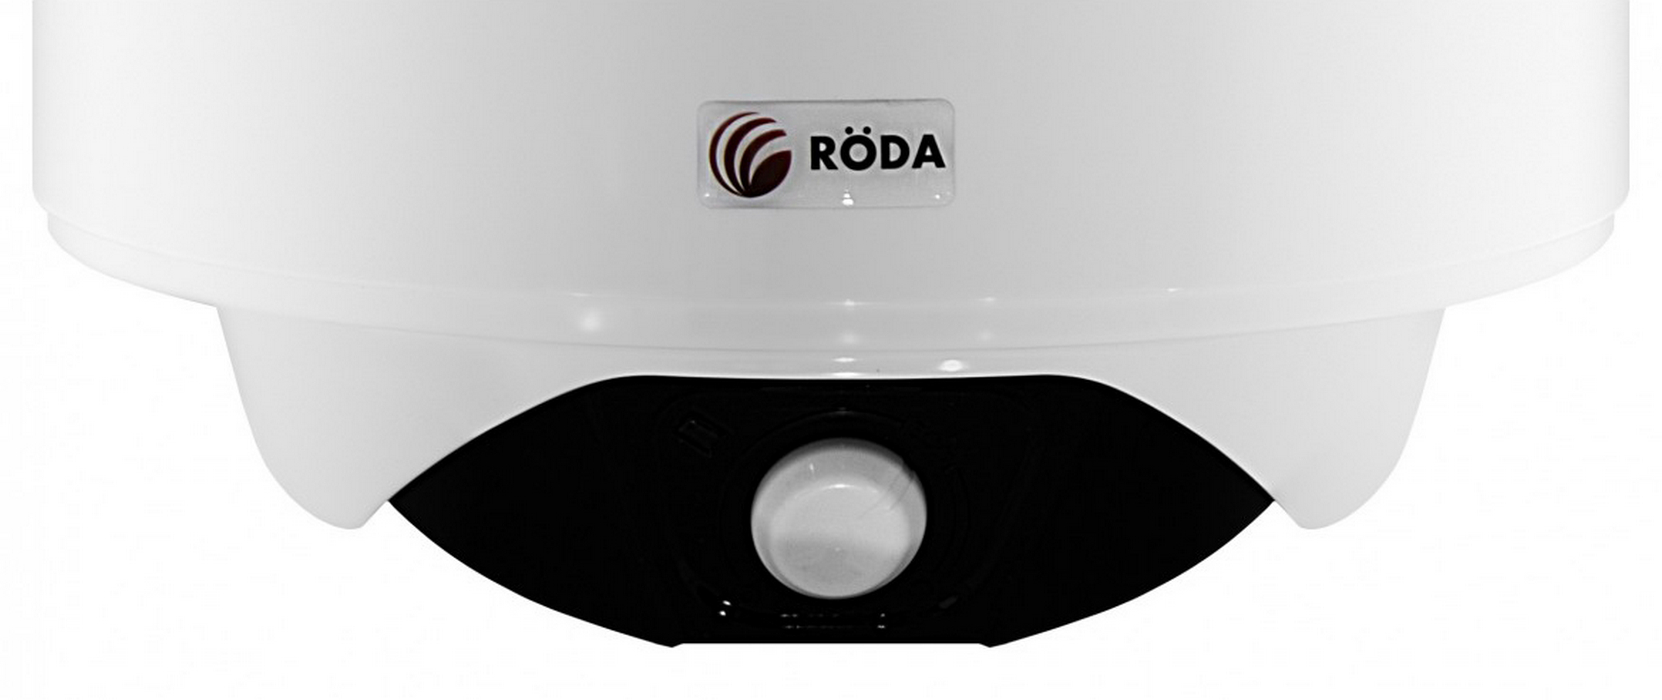 Бойлер Roda Spectrum 80 V характеристики - фотография 7